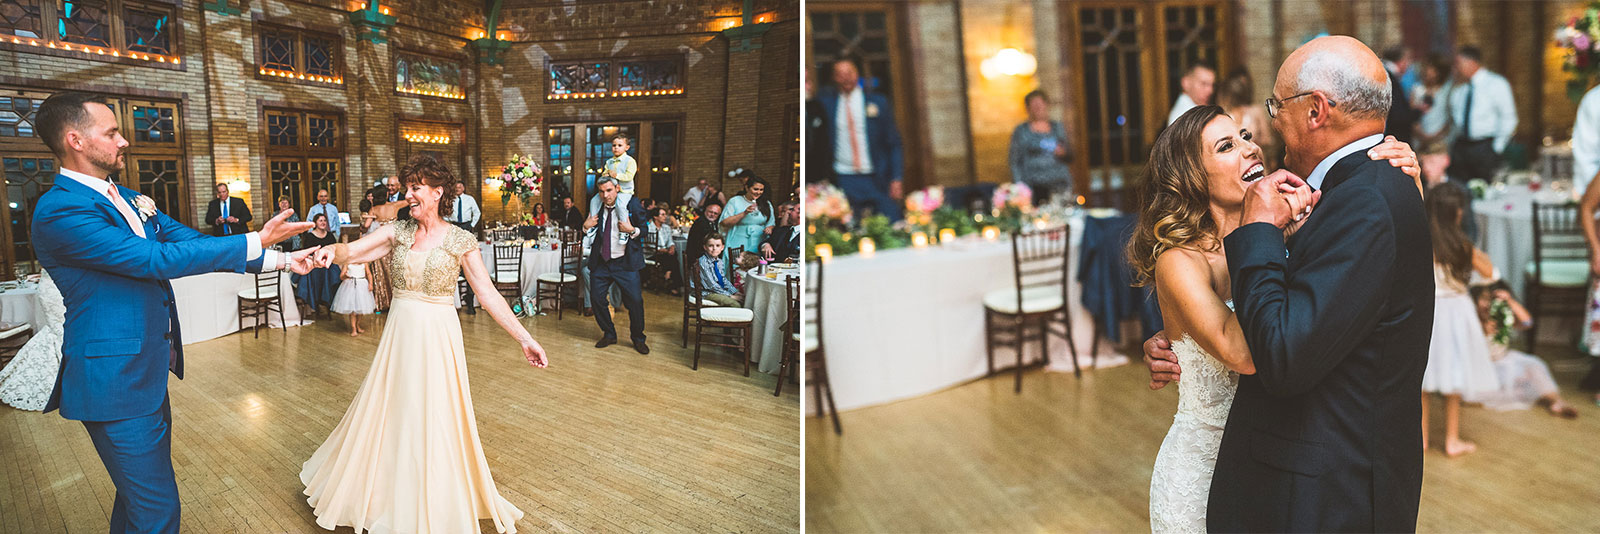 67 mother son dance - Natalie + Alan // Chicago Wedding Photographer at Cafe Brauer